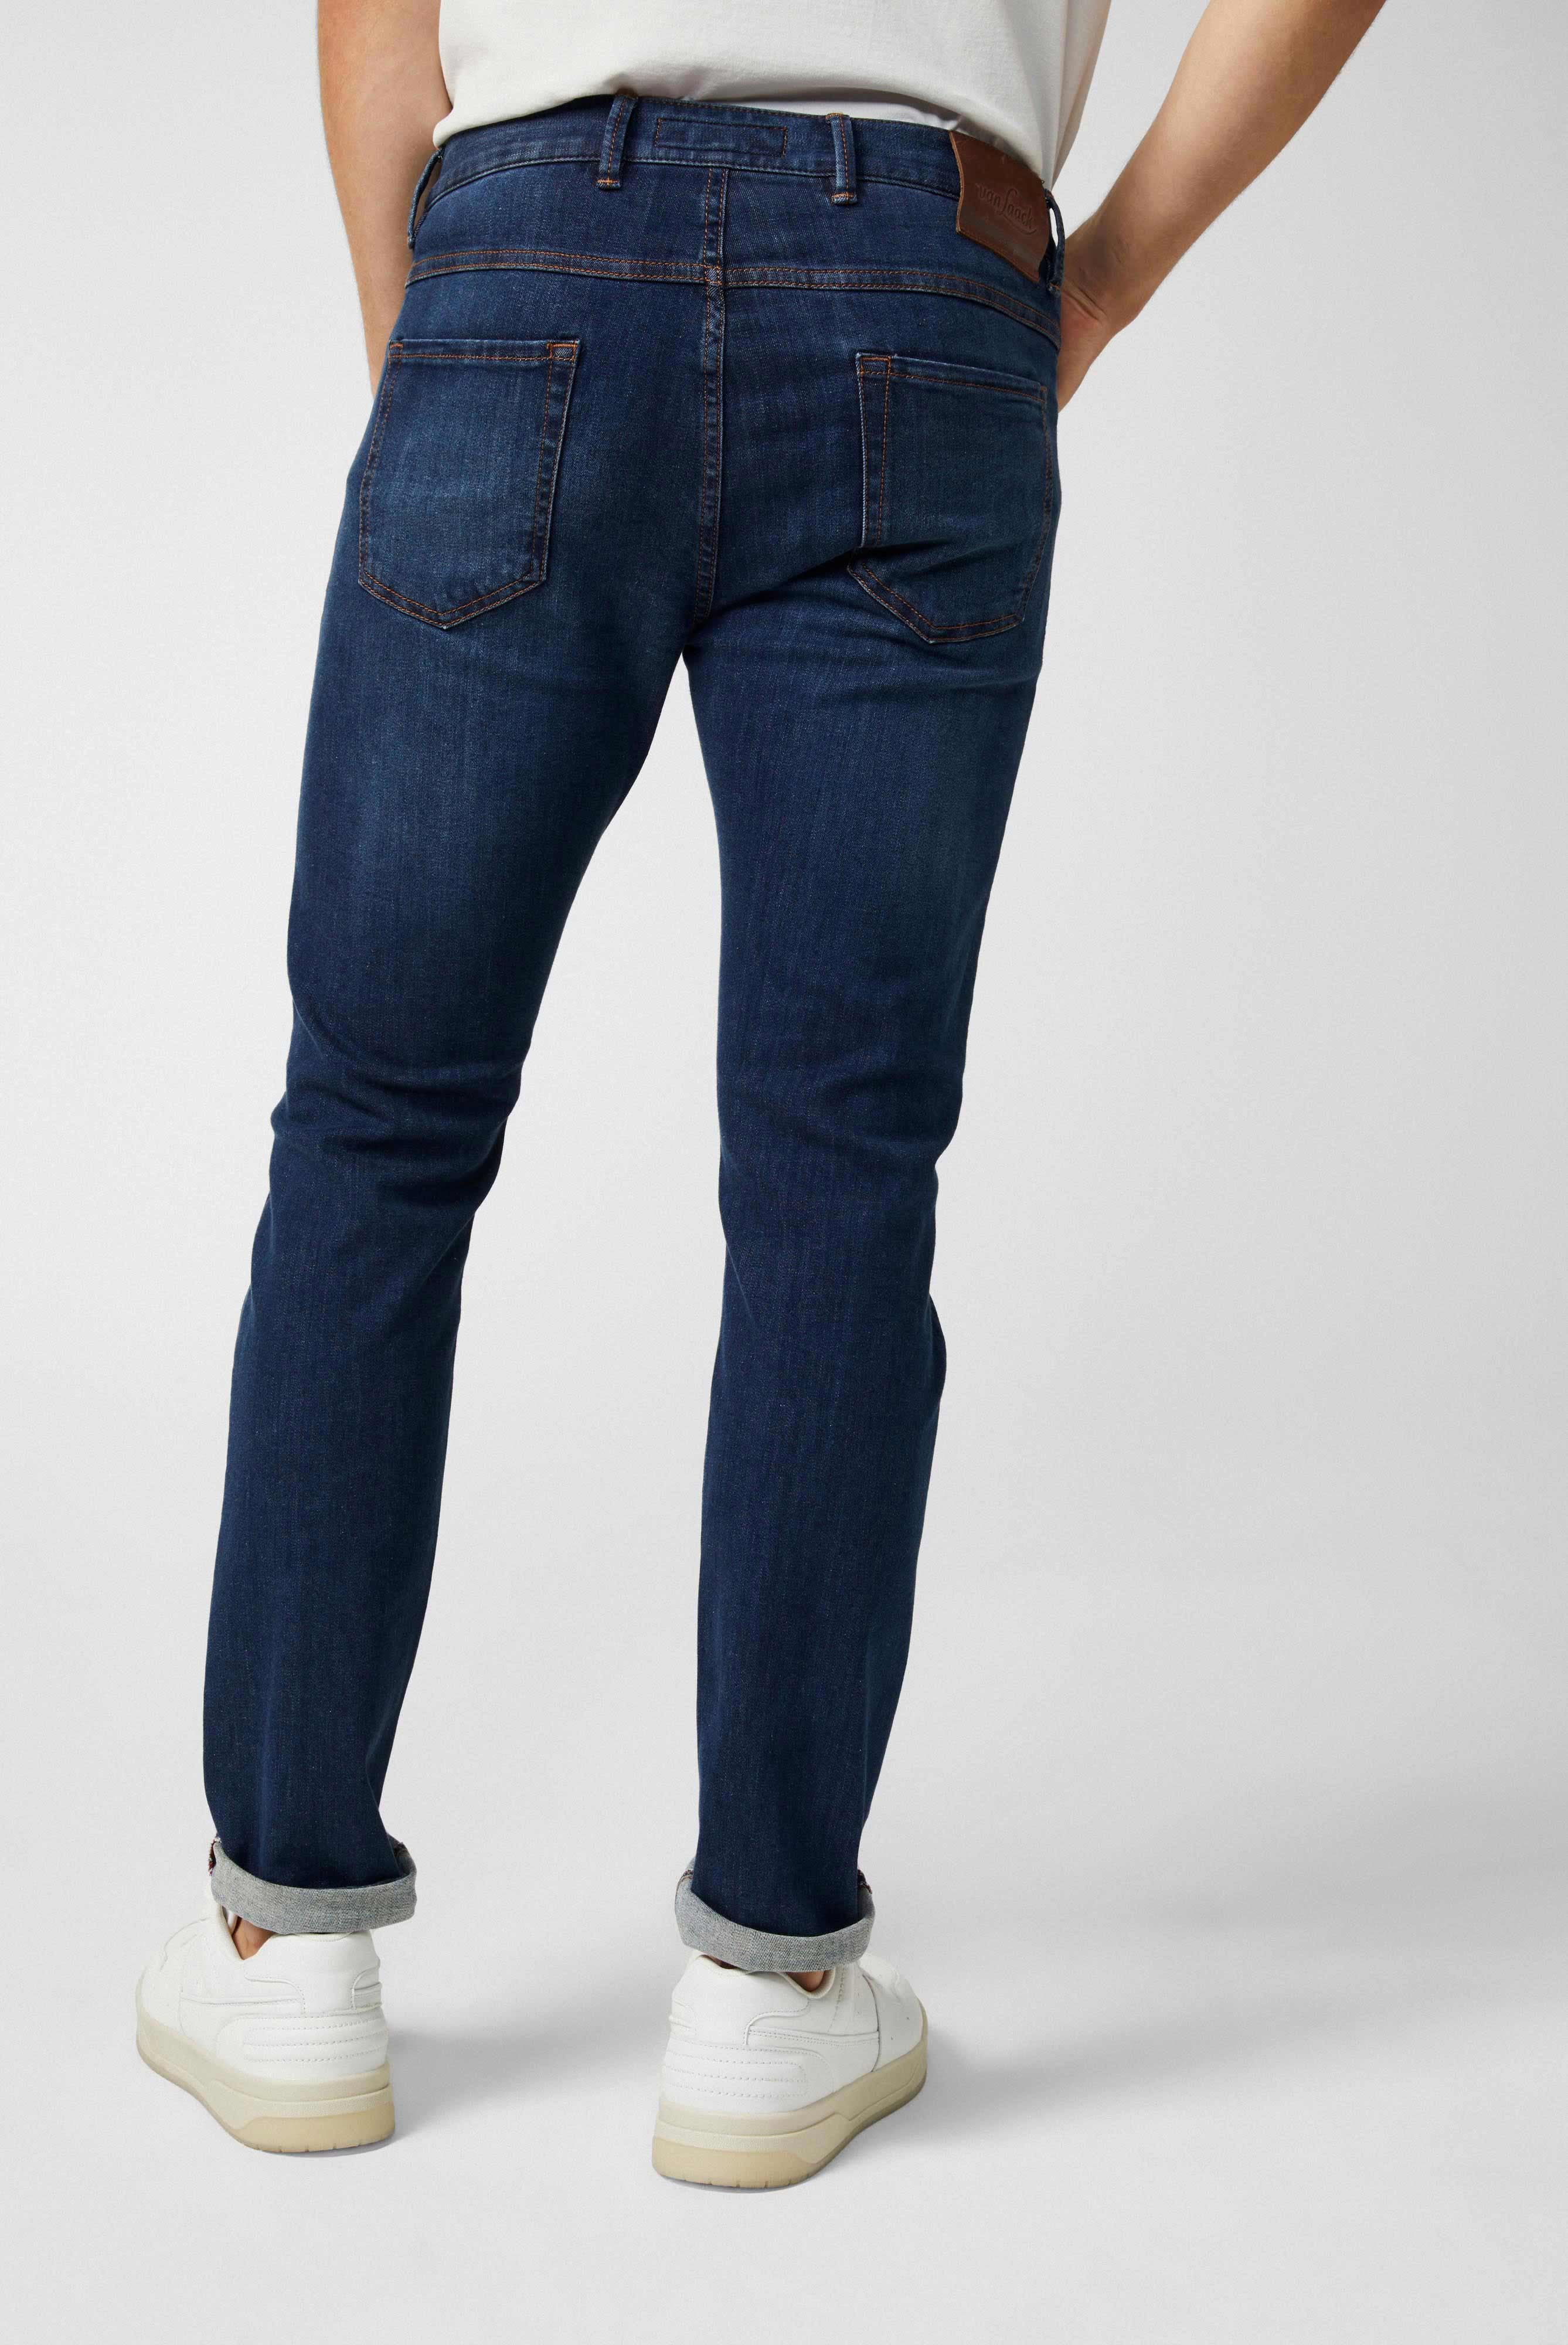 Jeans & Hosen+Jeanshose mit Streth Slim Fit+80.7857..J00117.780.29N